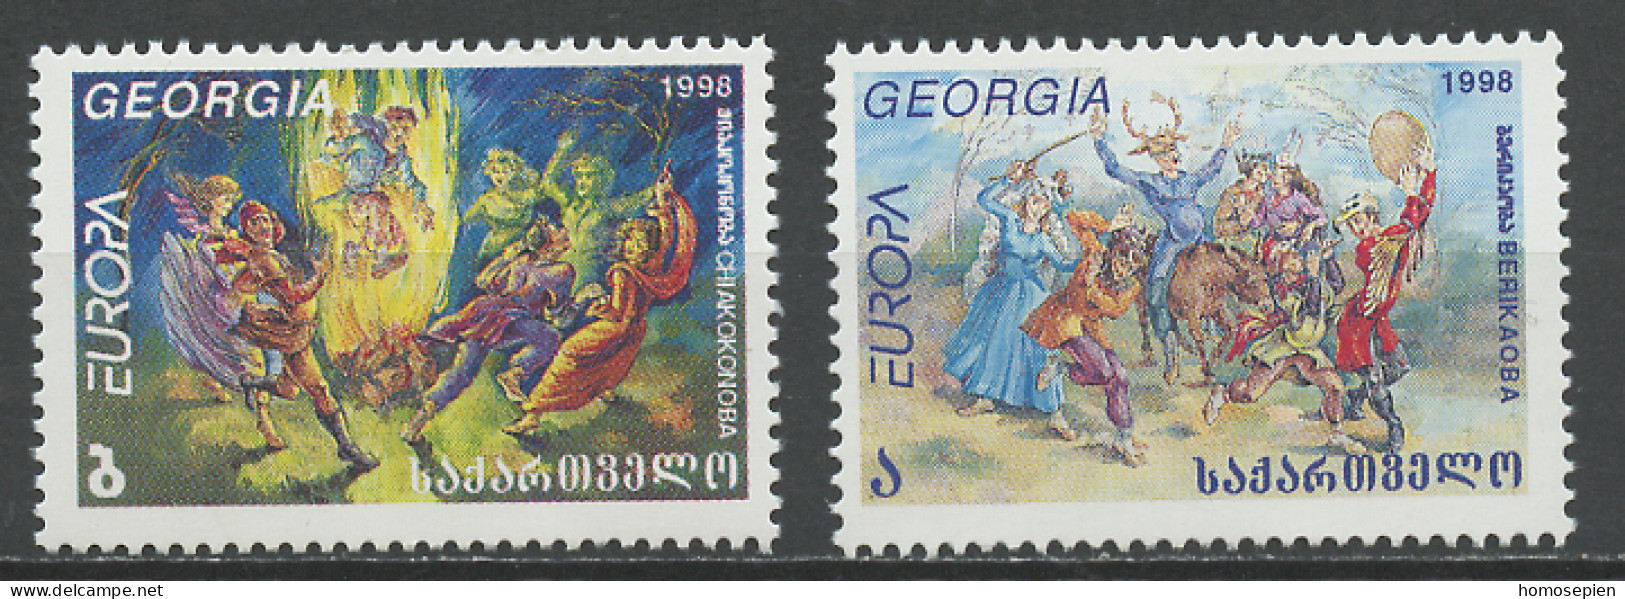 Europa CEPT 1998 Géorgie - Georgien - Georgia Y&T N°221 à 222 - Michel N°296 à 297 *** - 1998